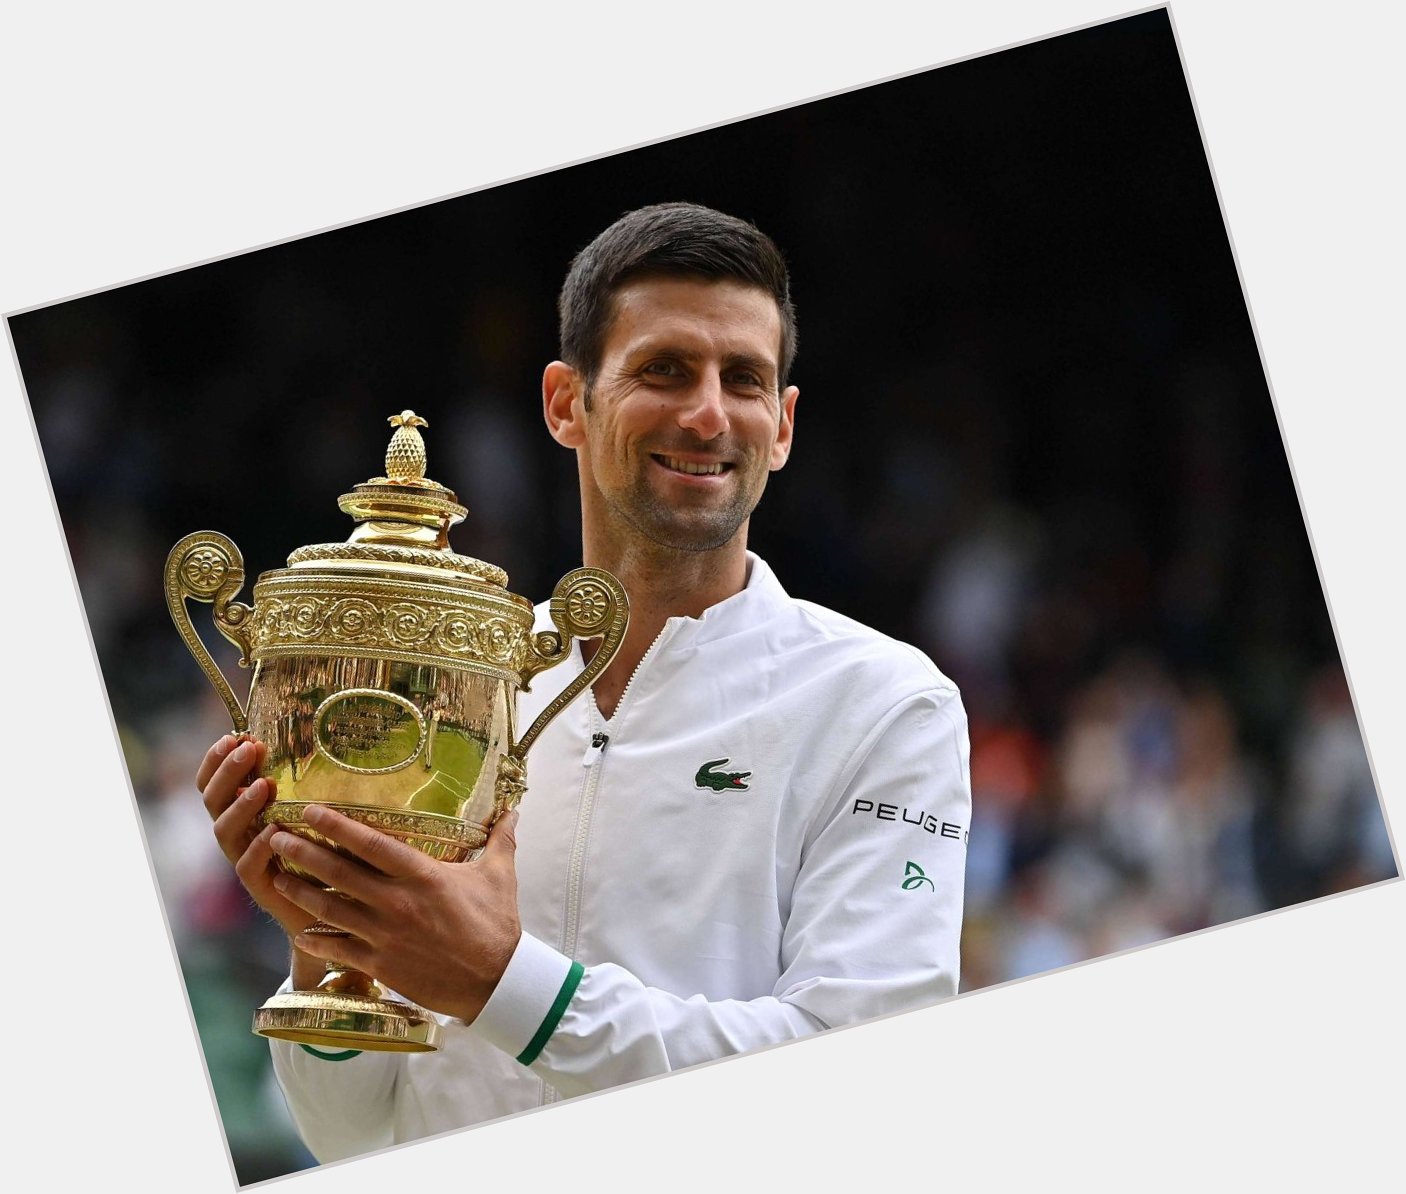 Happy Birthday dear Novak Djokovic! 